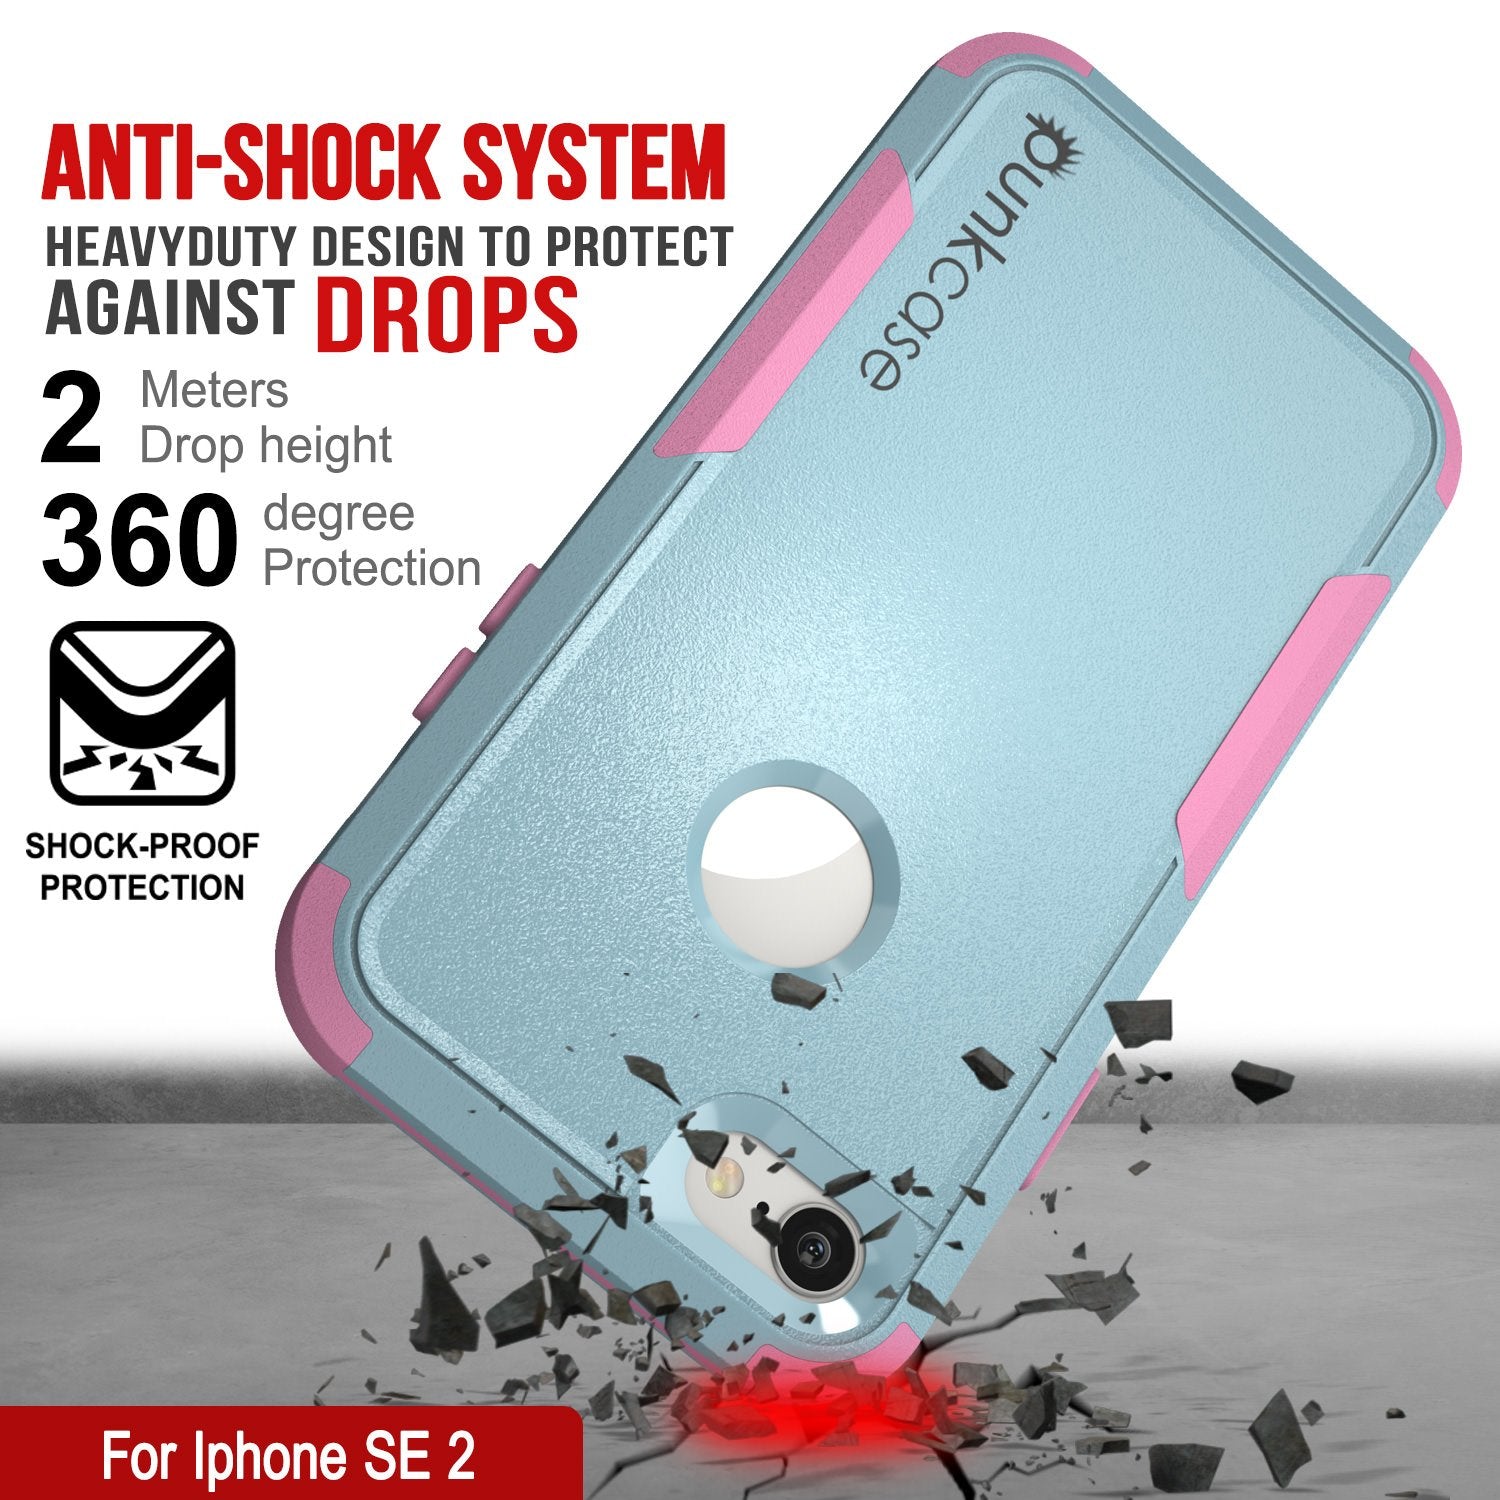 Punkcase for iPhone SE Belt Clip Multilayer Holster Case [Patron Series] [Mint-Pink]